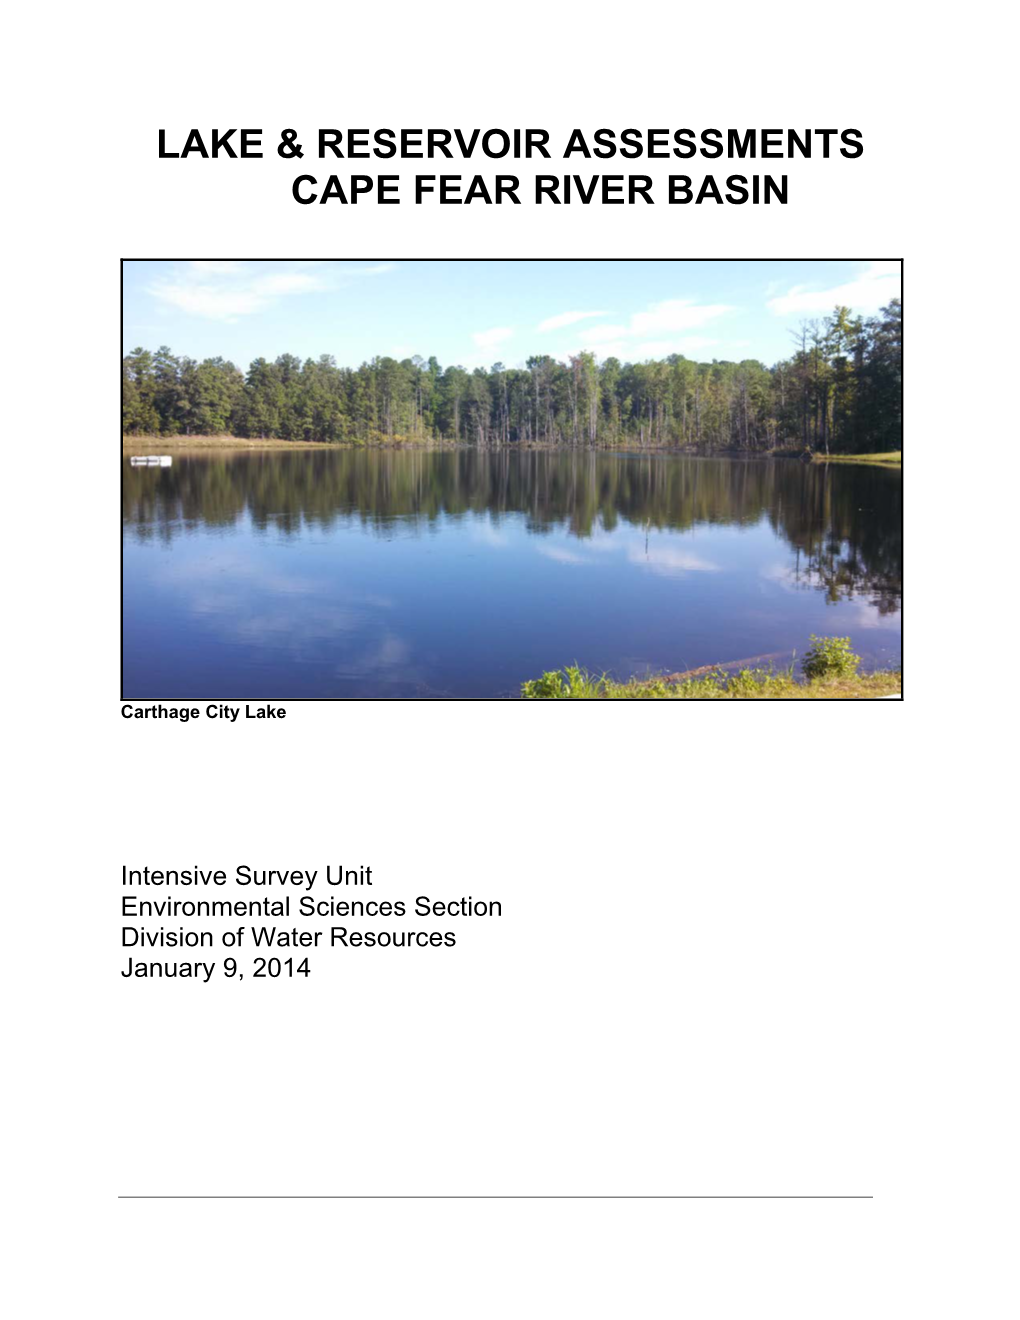 Lake & Reservoir Assessments Cape Fear River Basin